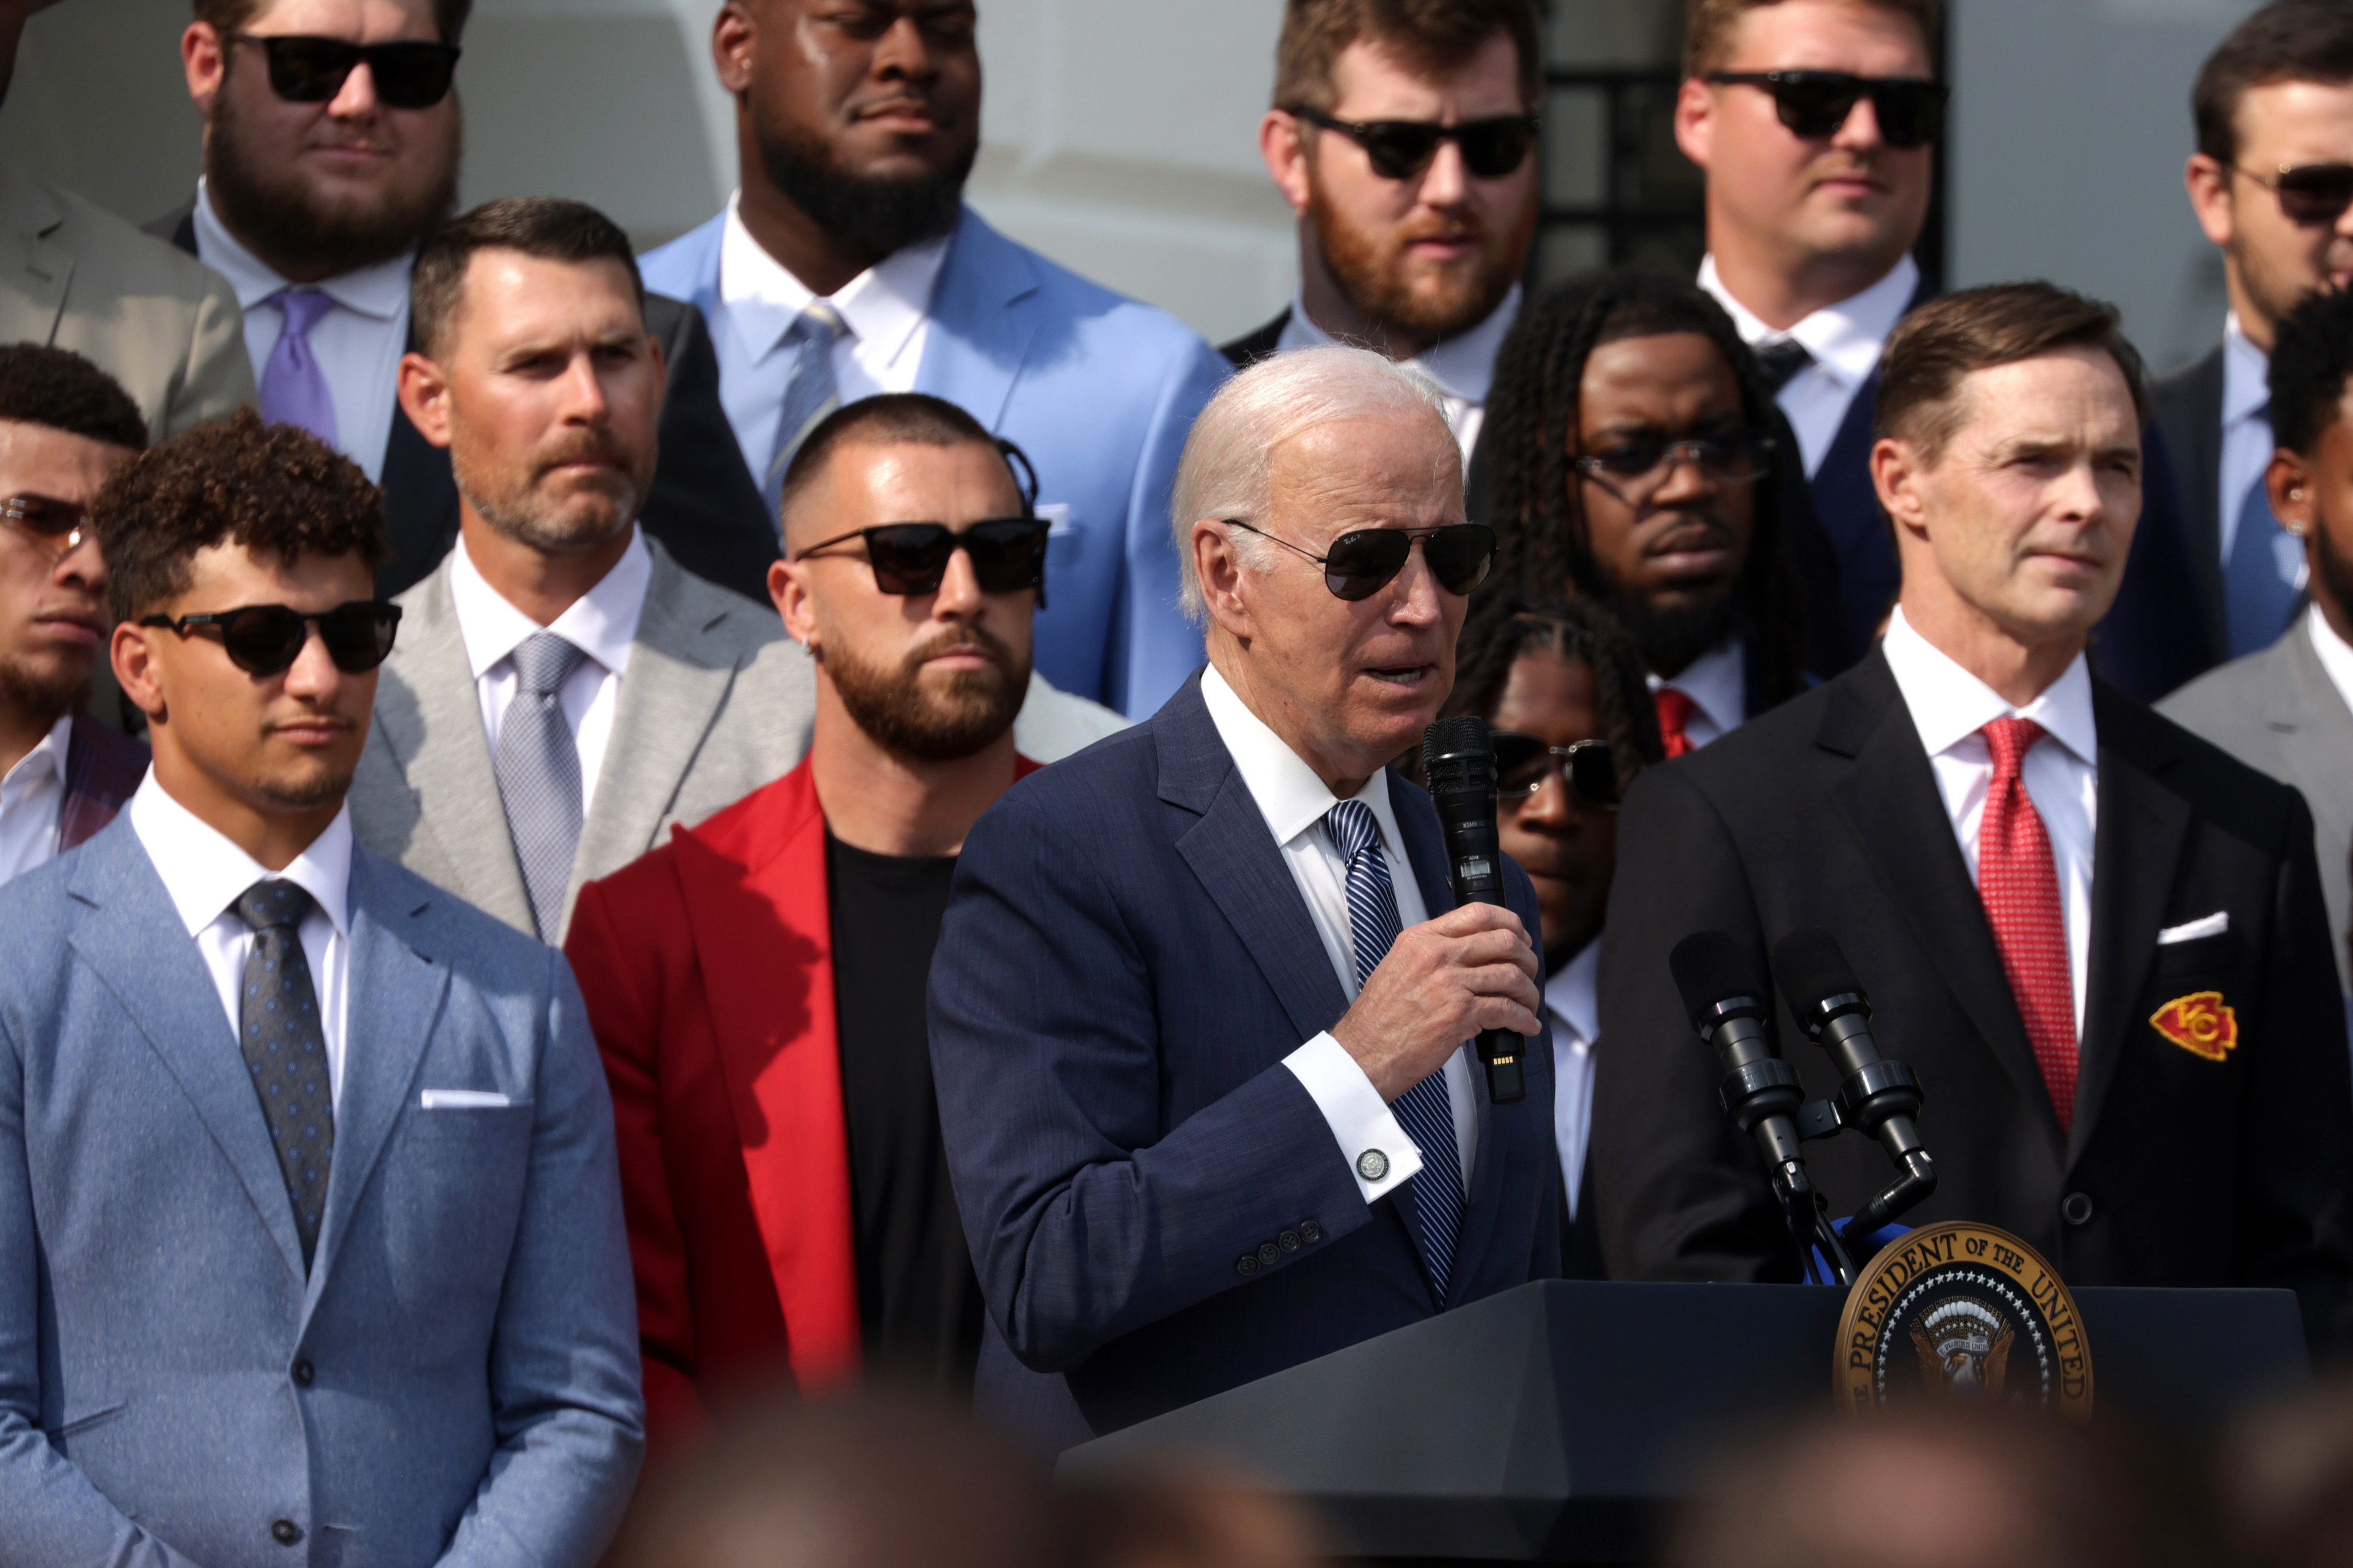 Biden at a podium with the team behind him